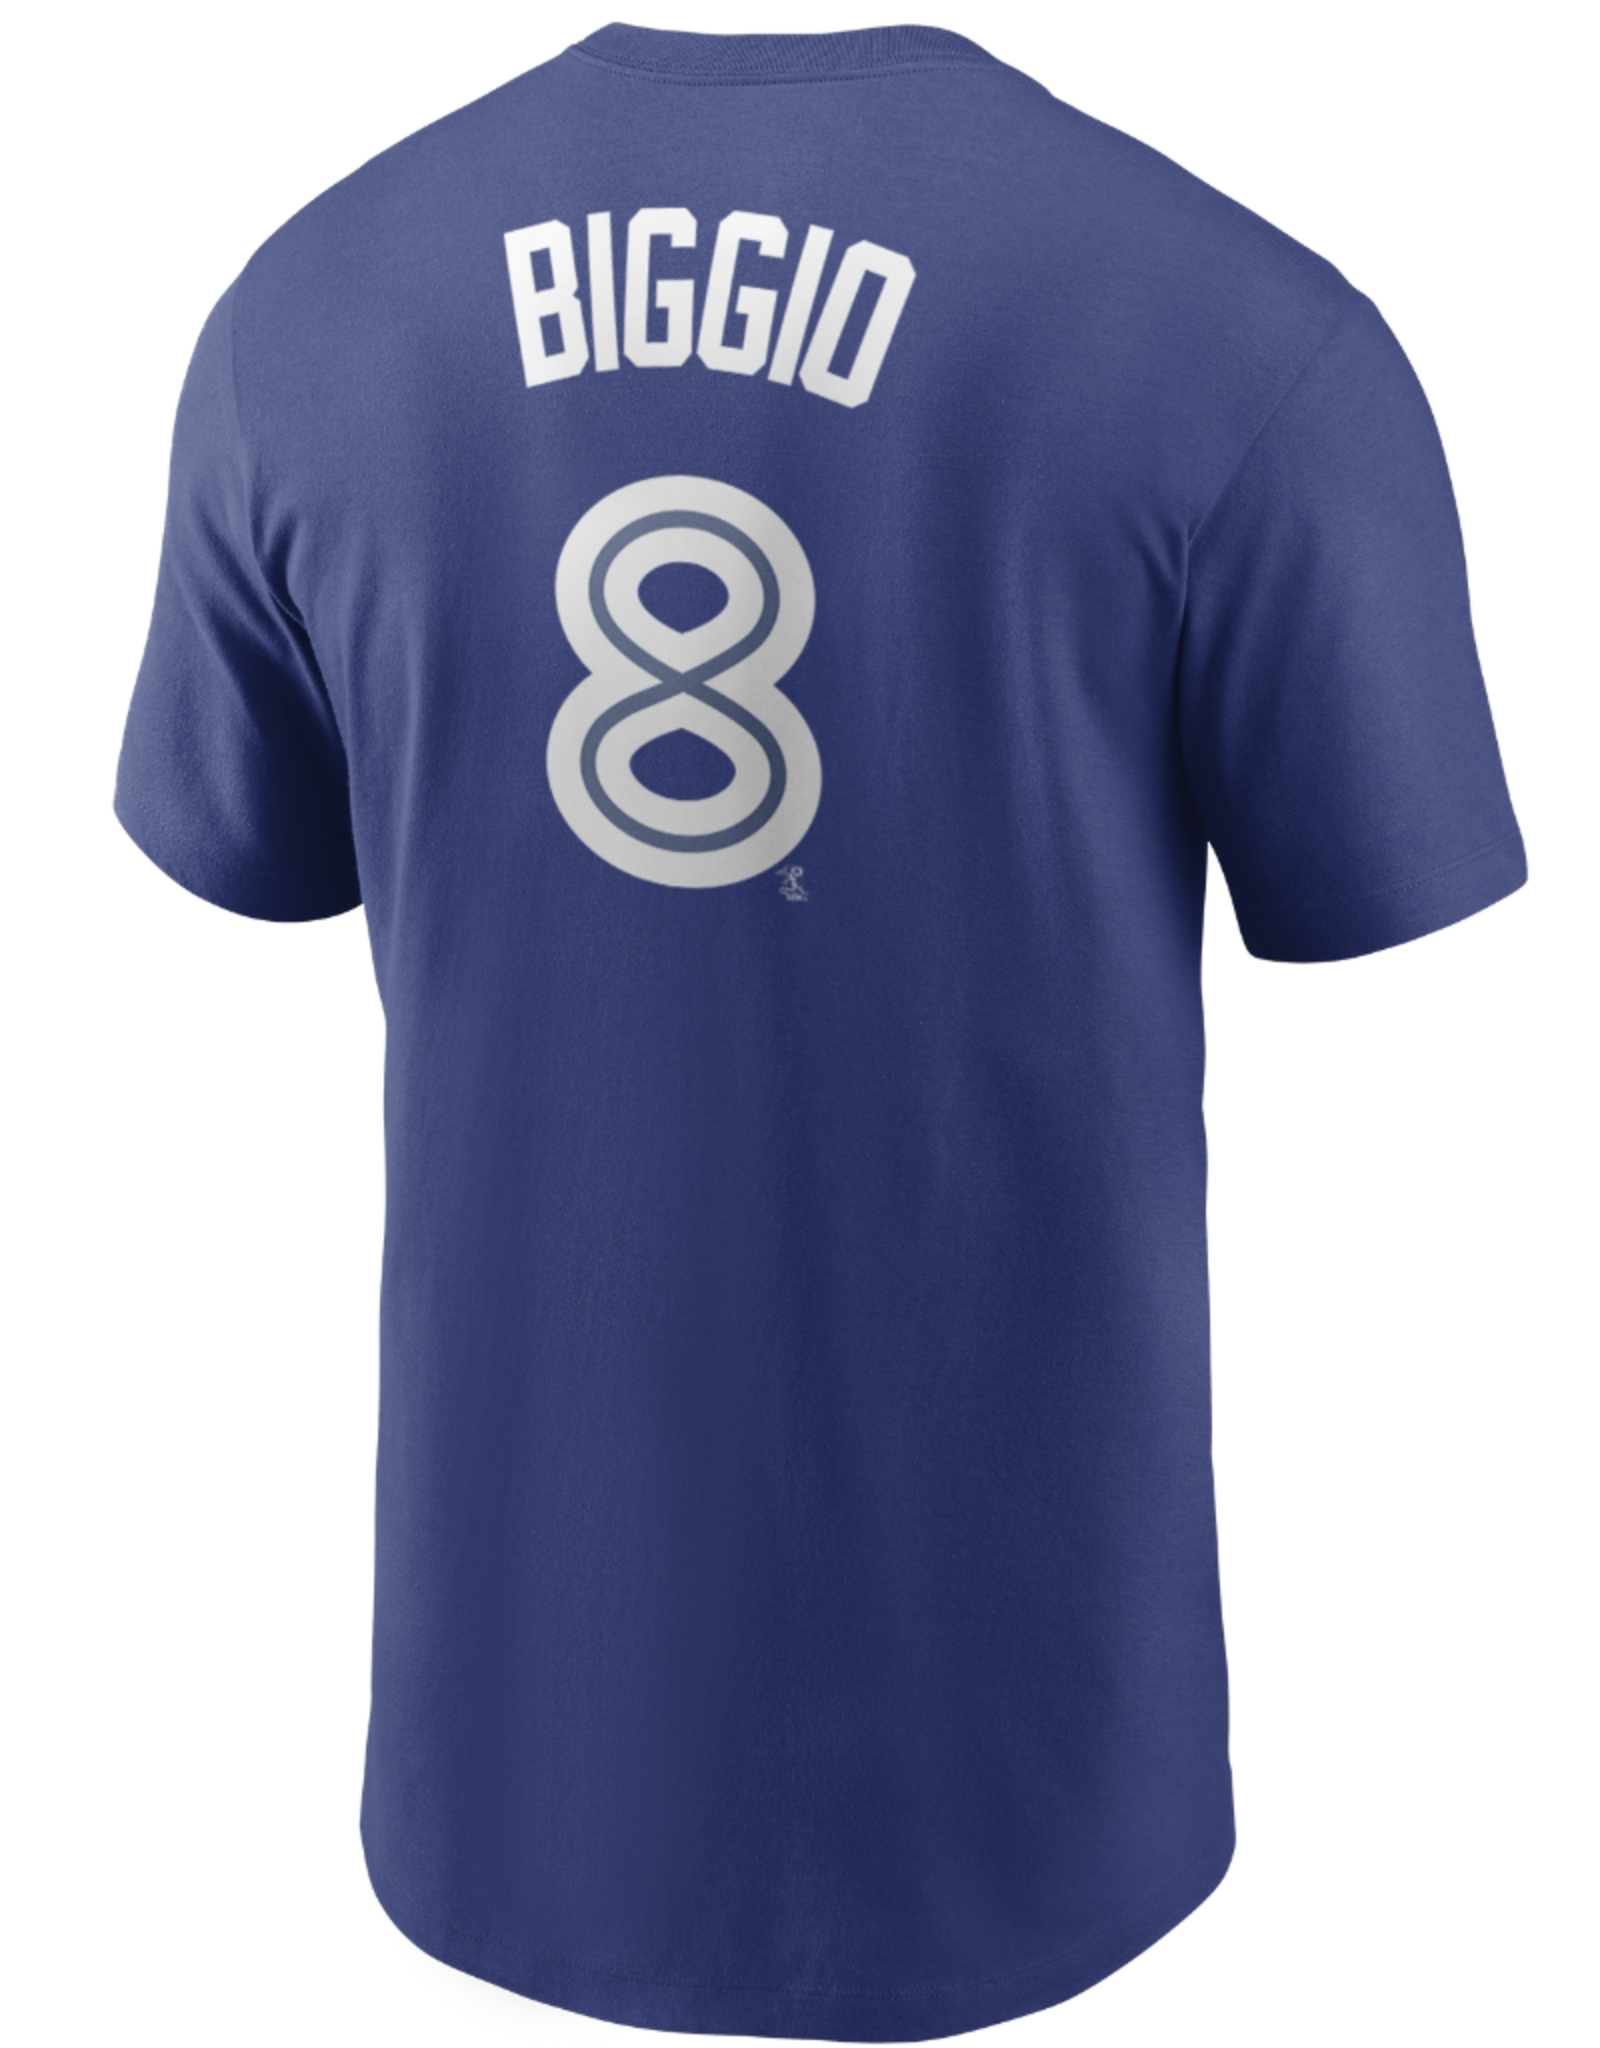 Men's Player T-Shirt Biggio #8 Toronto Blue Jays Royal